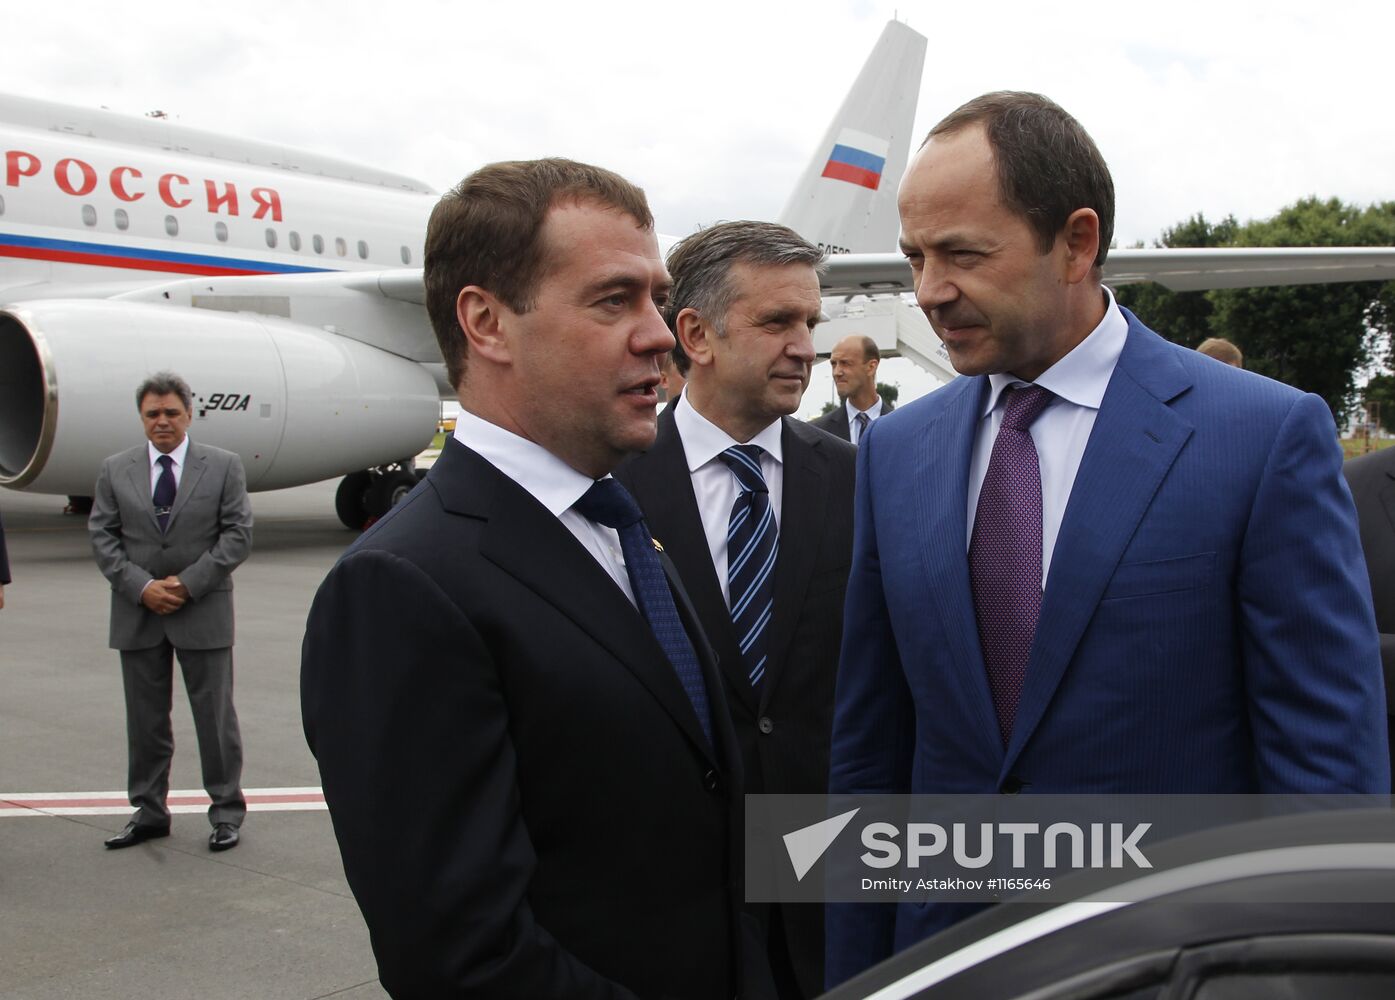 Dmitry Medvedev's working trip to Ukraine